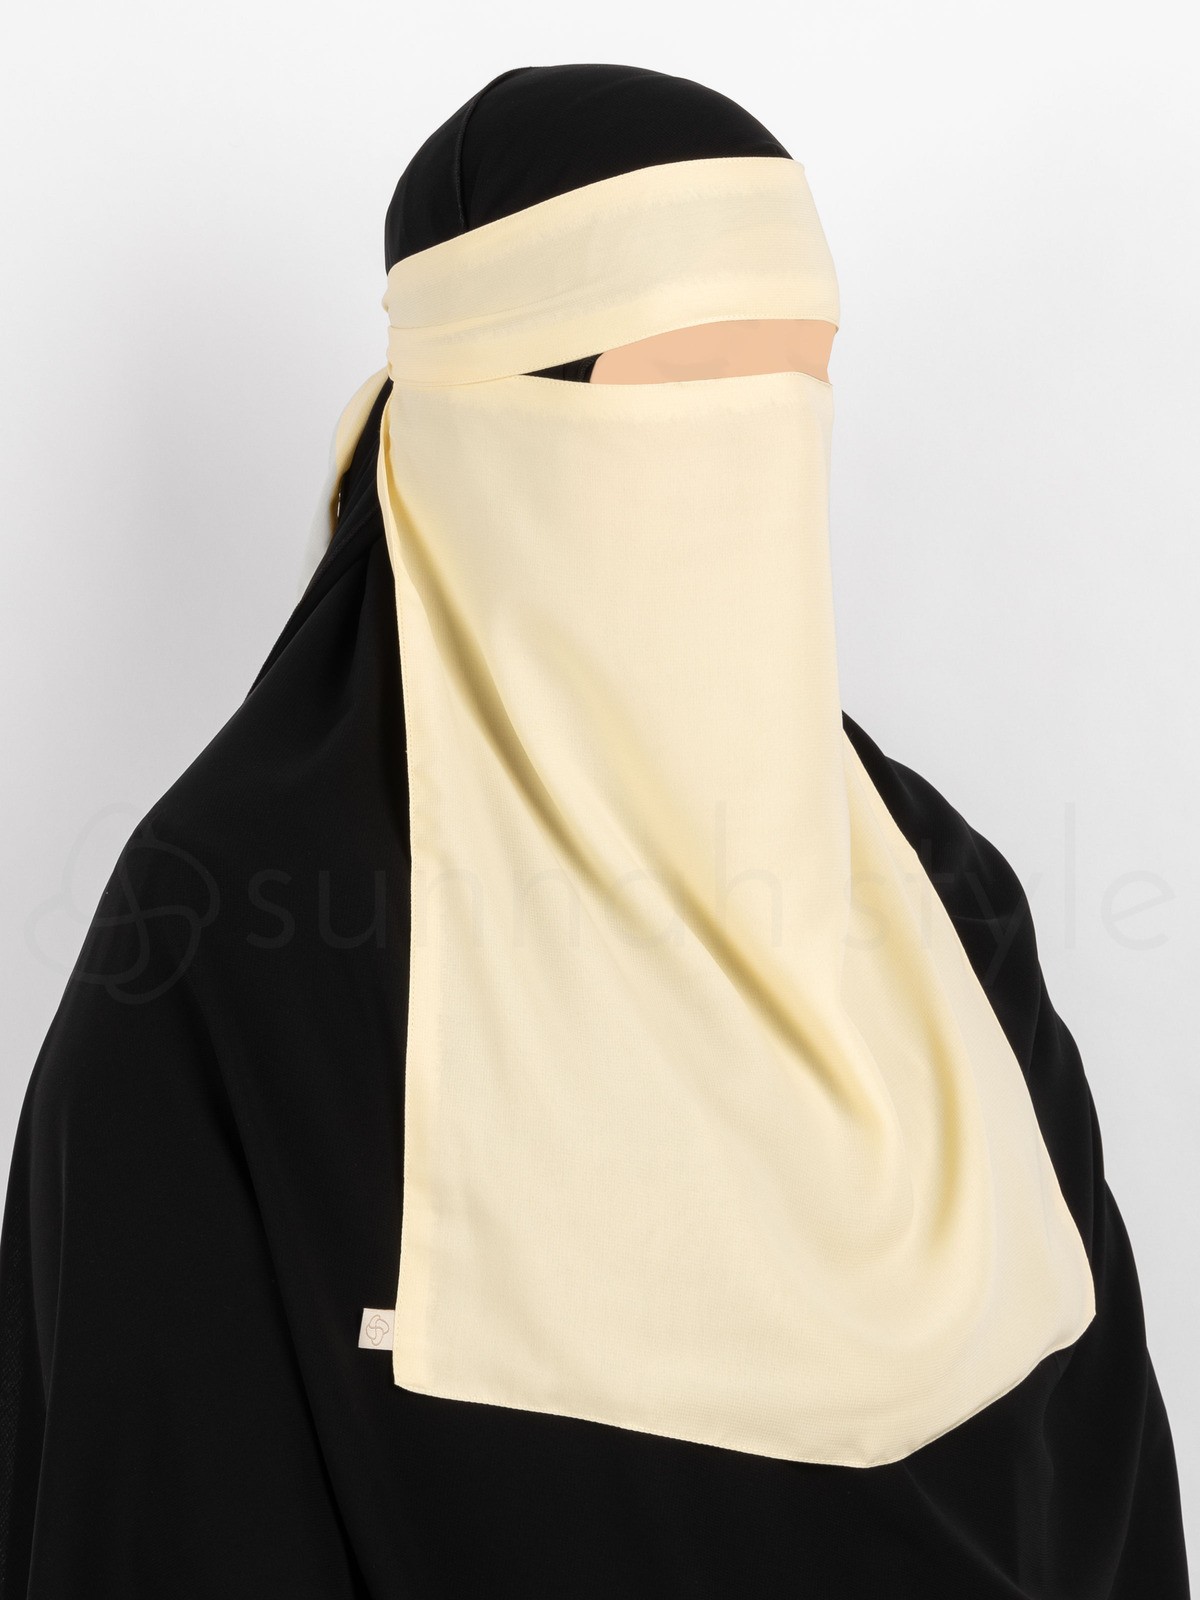 Sunnah Style - Pull-Down One Layer Niqab (Vanilla Cream)